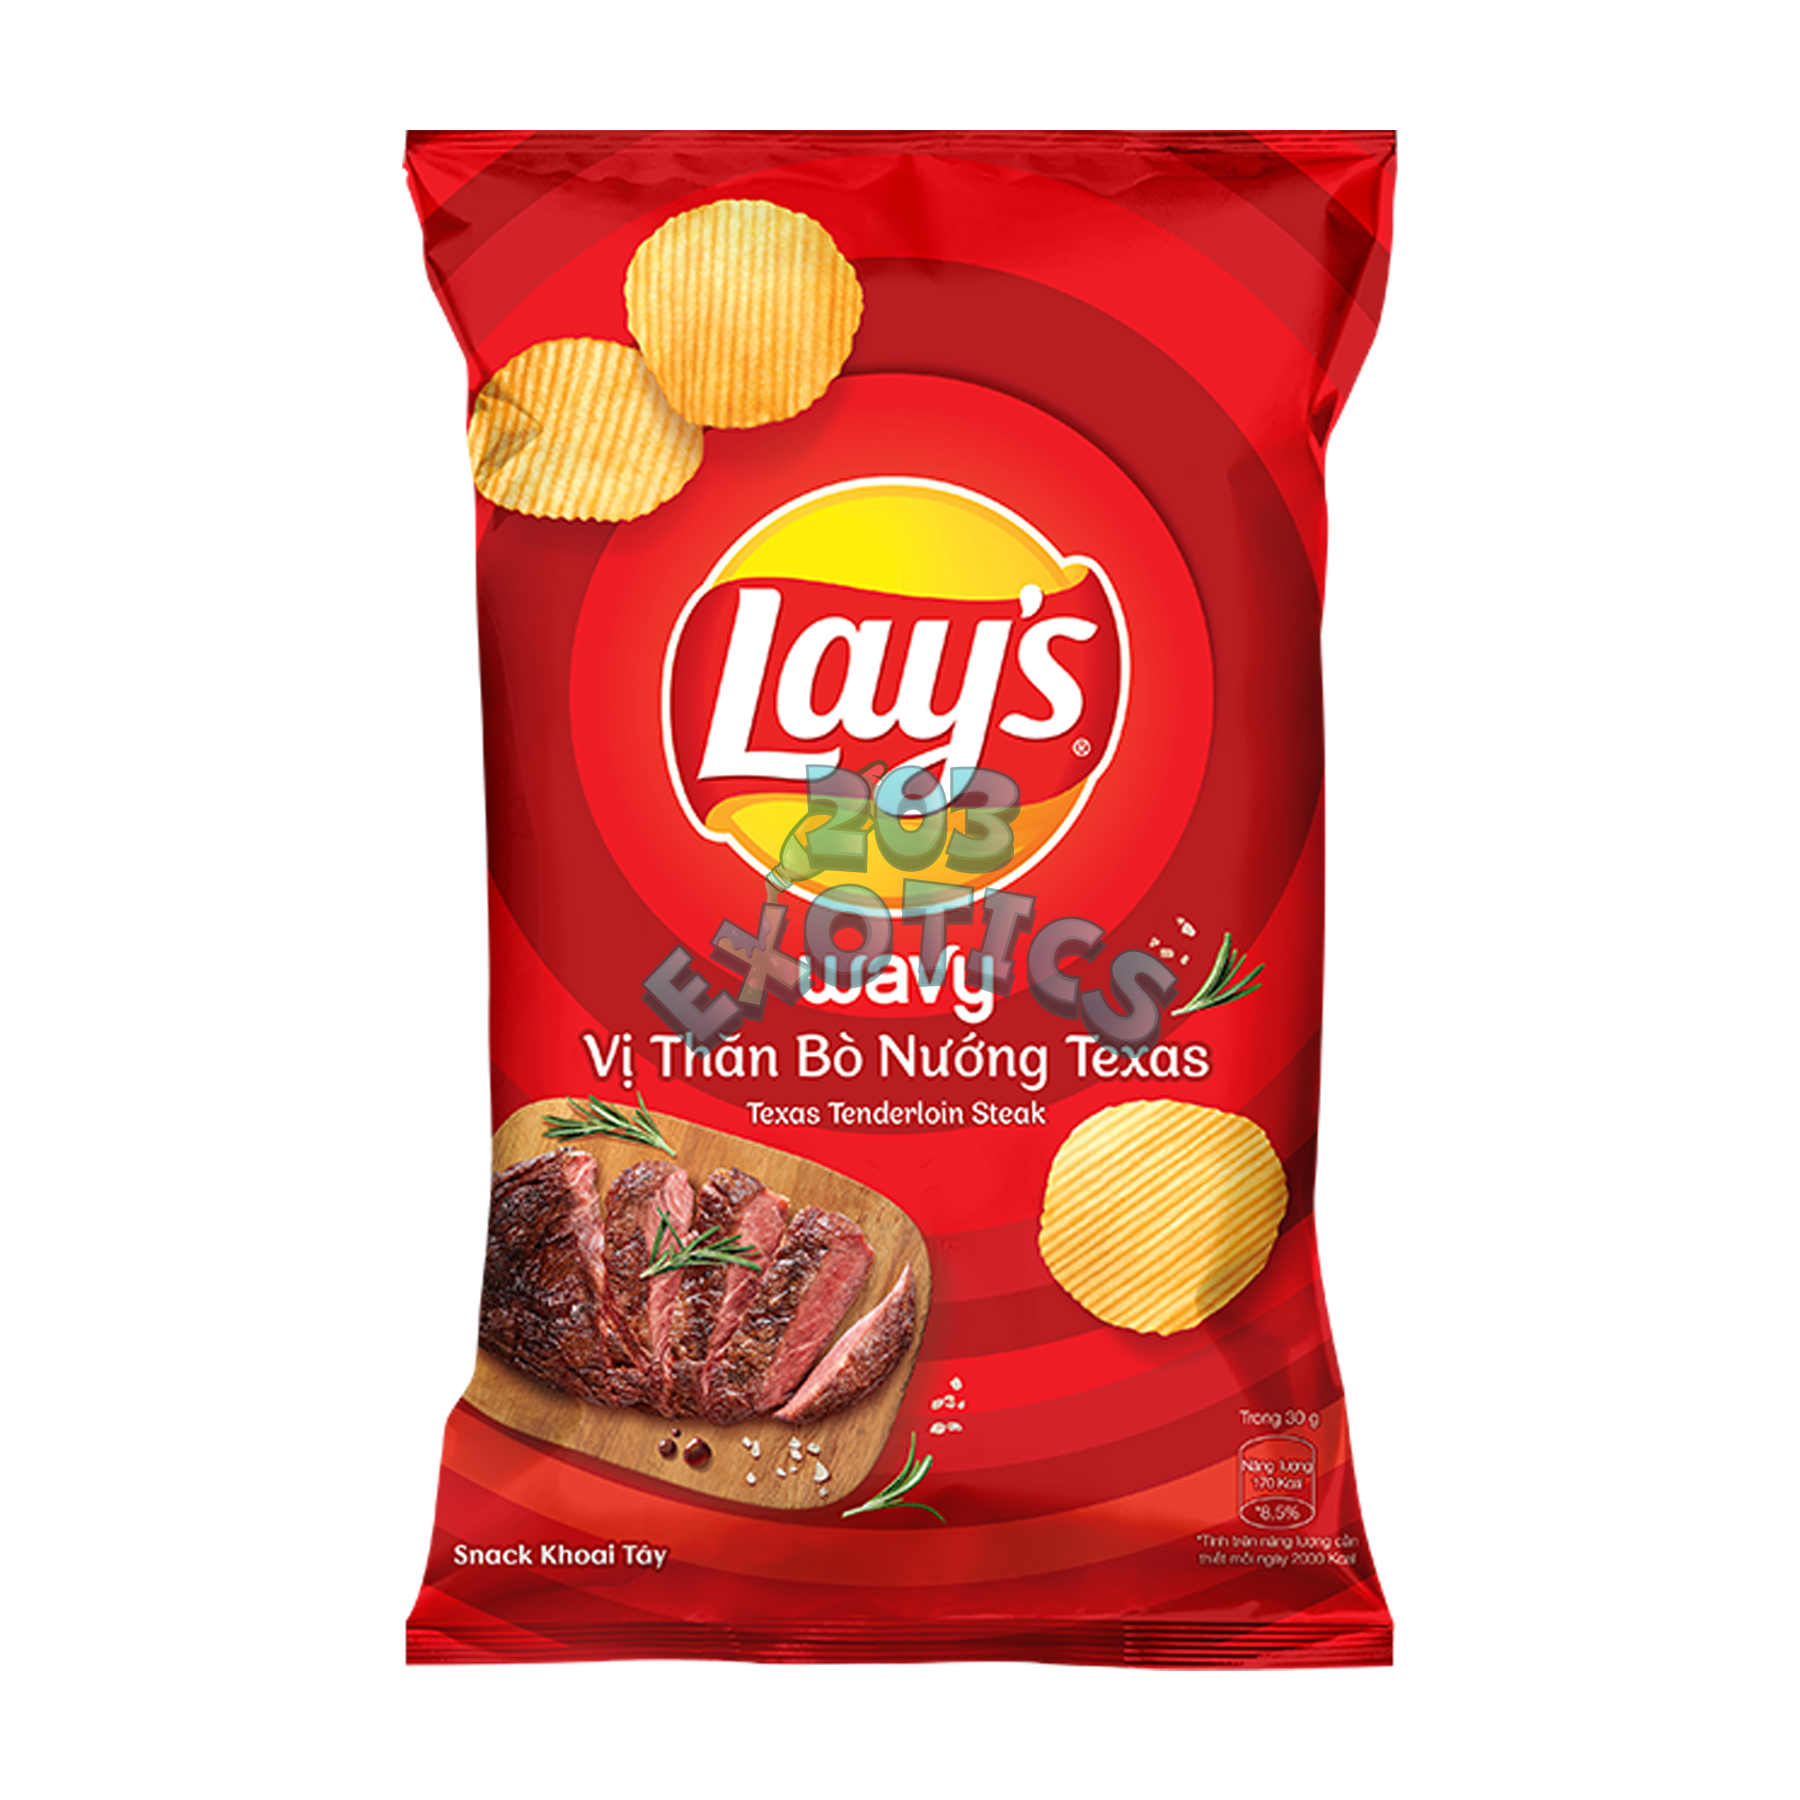 Lays Texas Tenderloin Steak Flavored Chips (58G) (Vietnam)